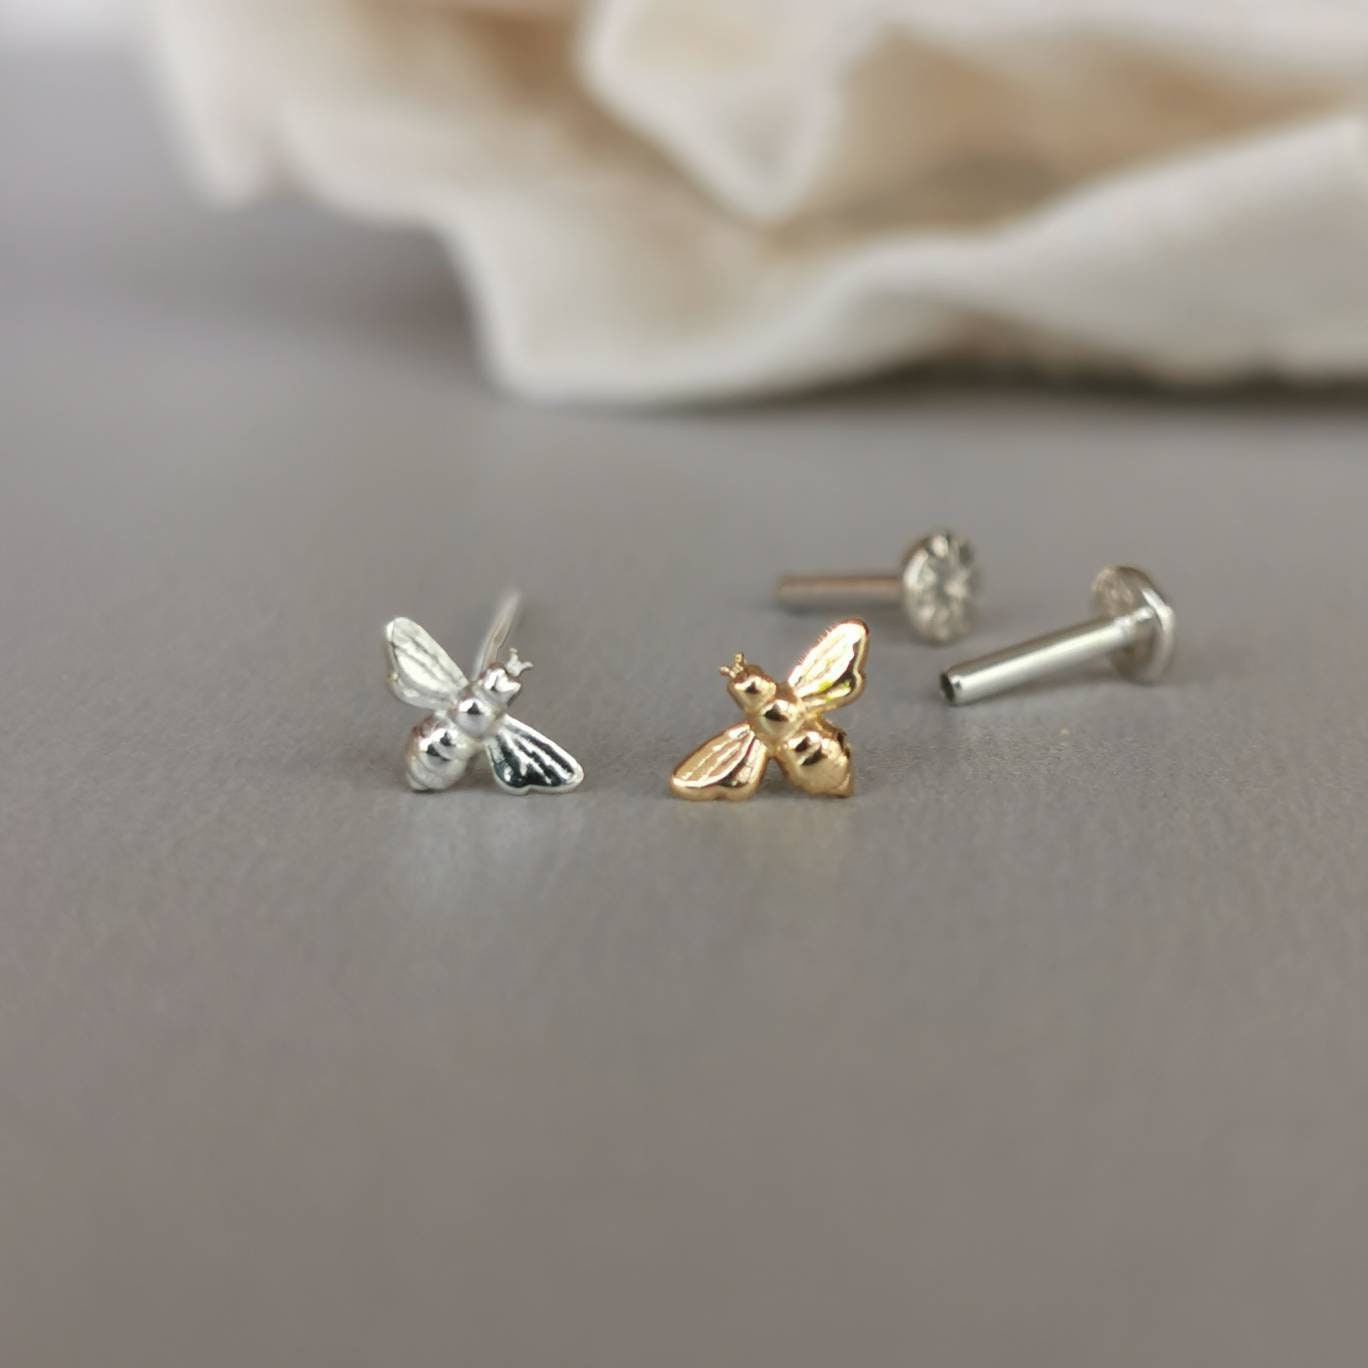 Silver/Gold Mini Bee Helix Tragus Earring 18g/16g Threadless | Etsy